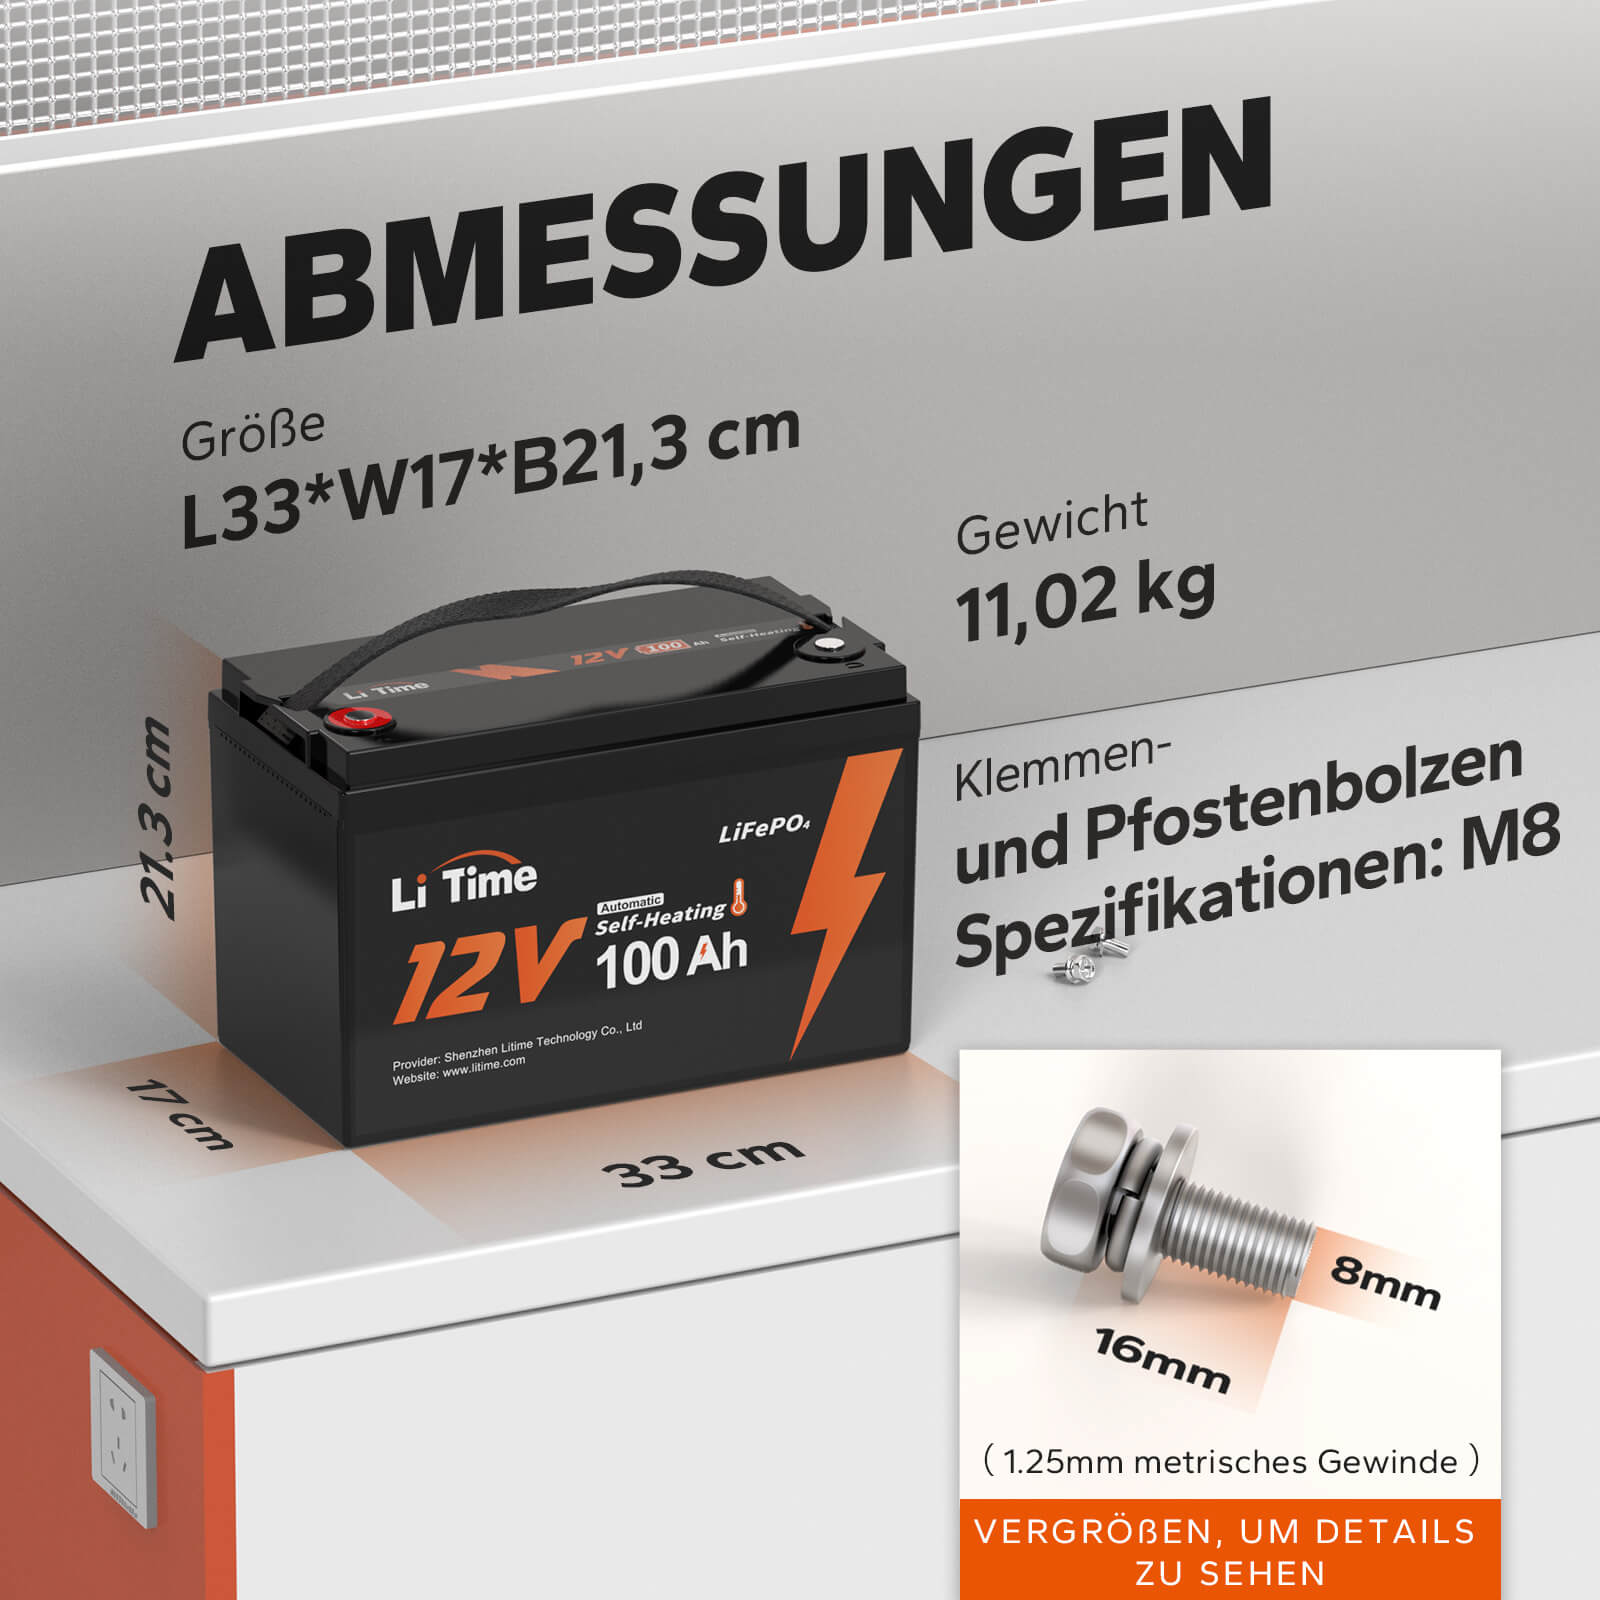 LiTime 12V 100Ah Selbstwärmende LiFePO4 Batterie mit 100A BMS, Tieftemperaturschutz